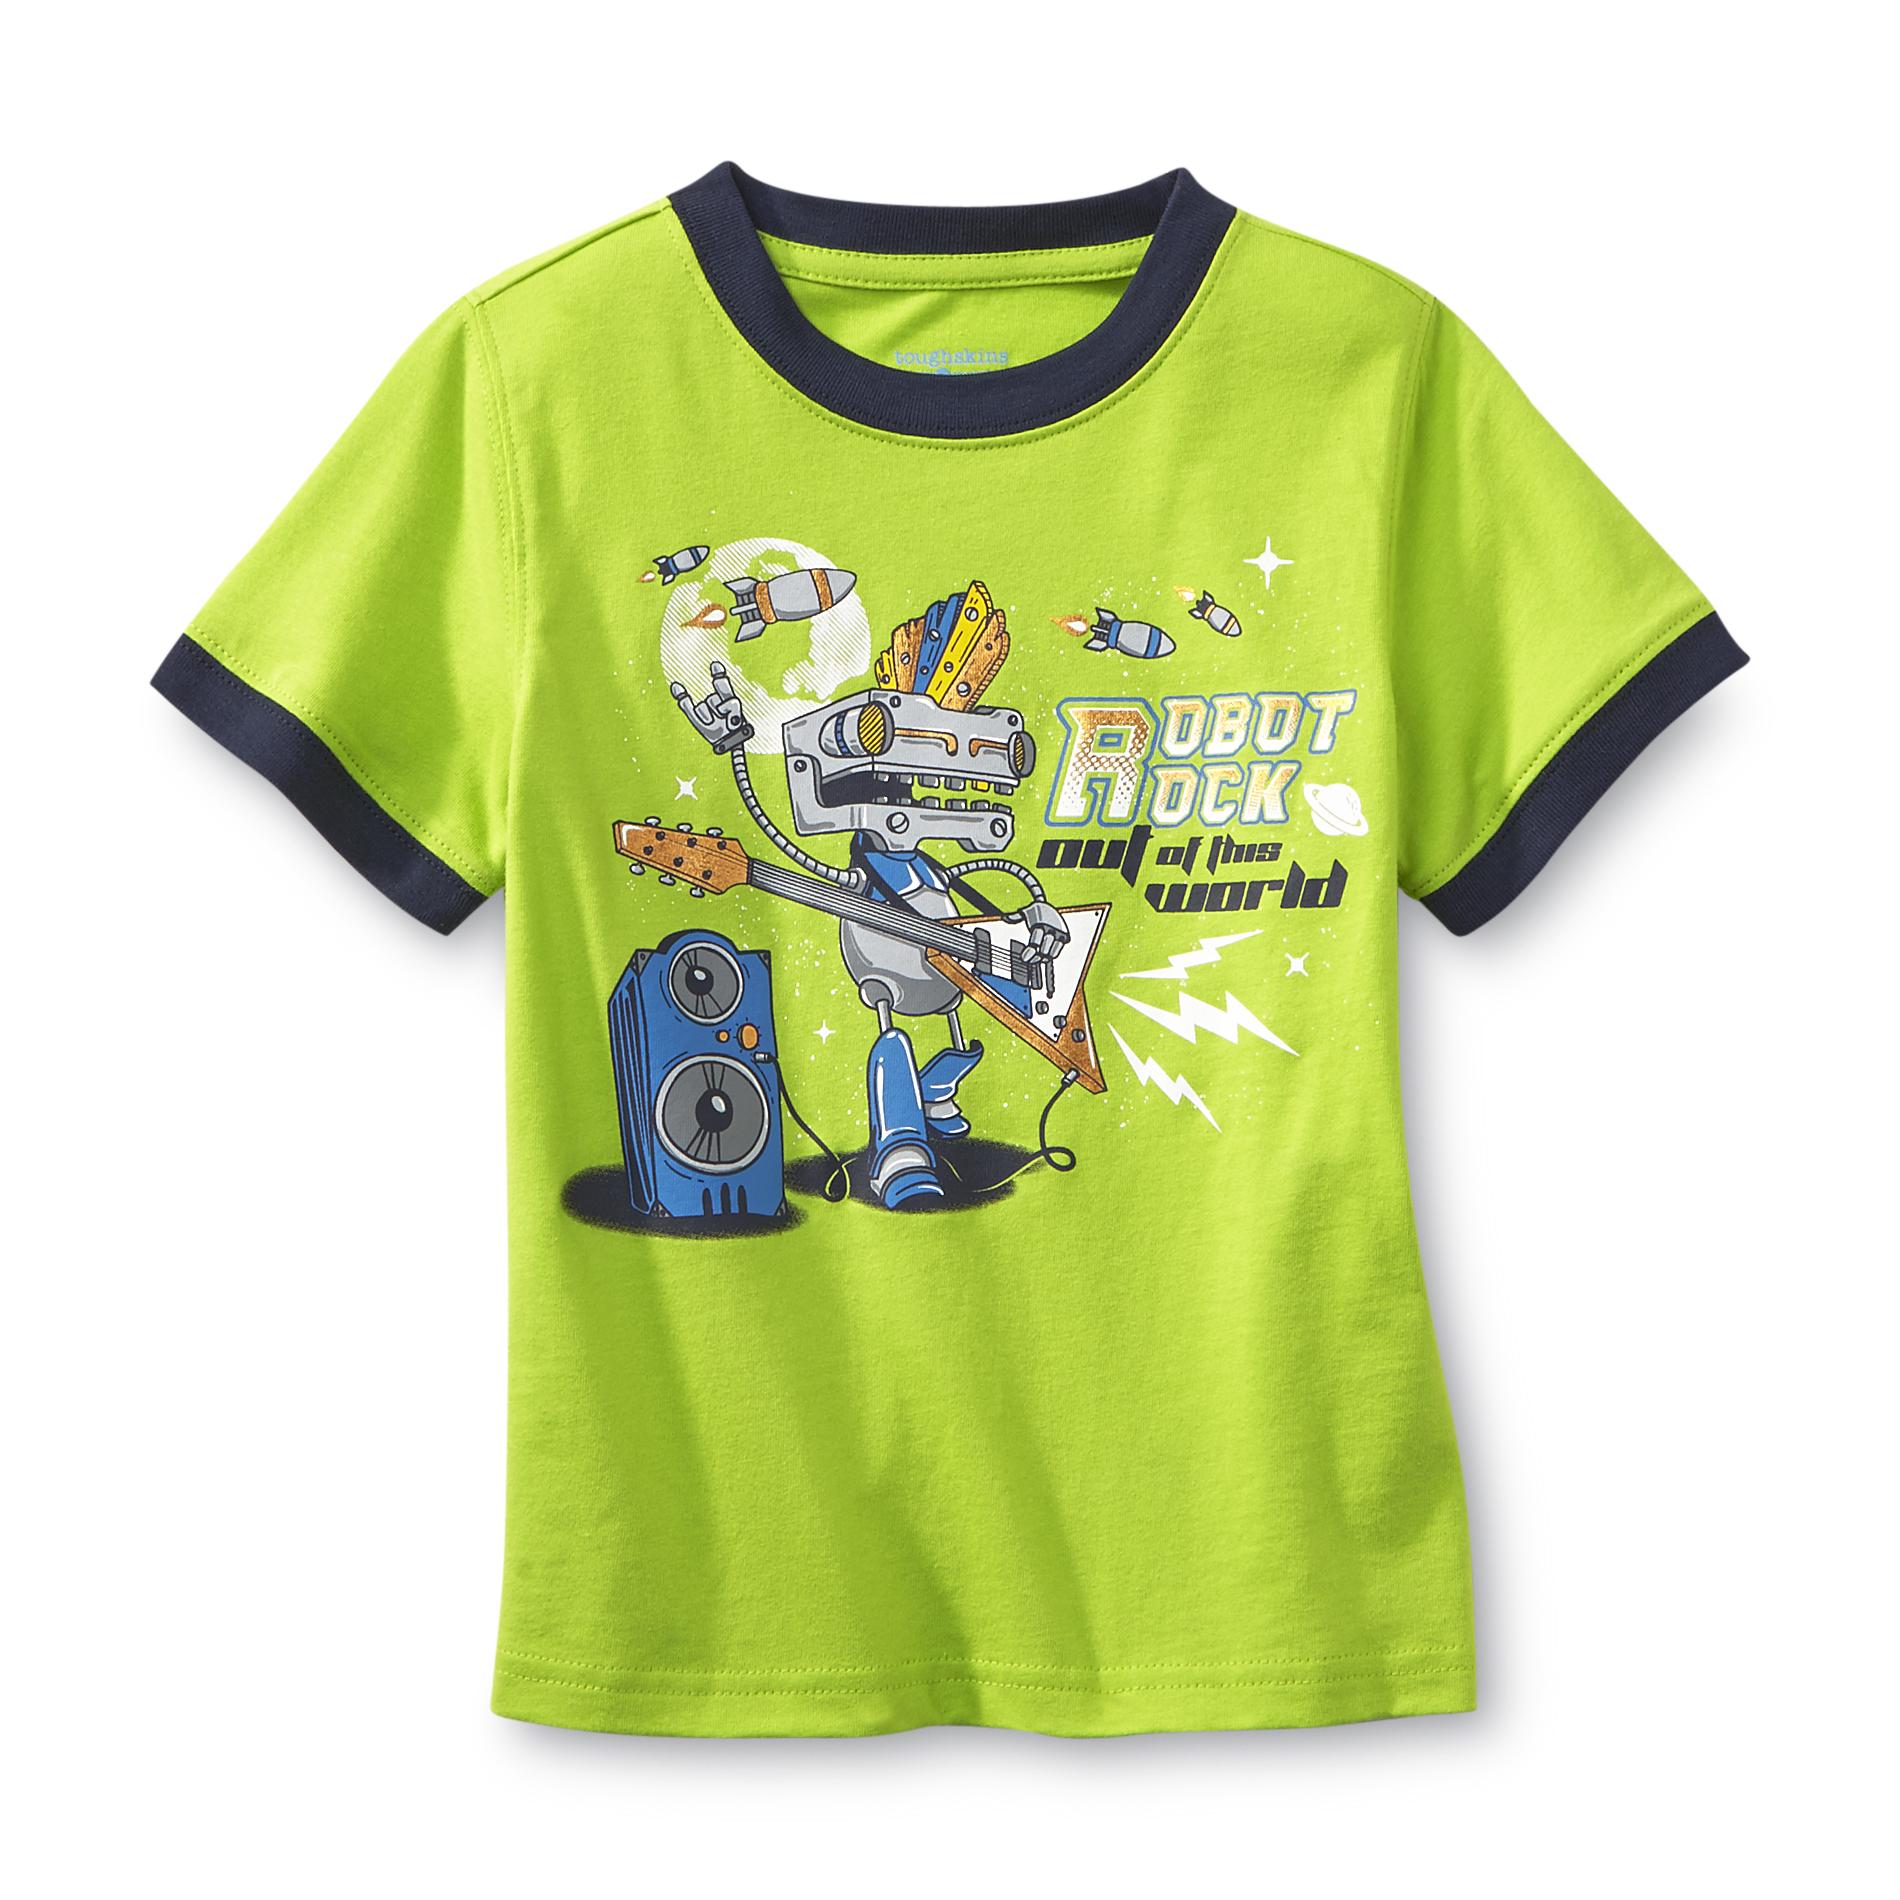 Toughskins Infant & Toddler Boy's T-Shirt - Robot Rock